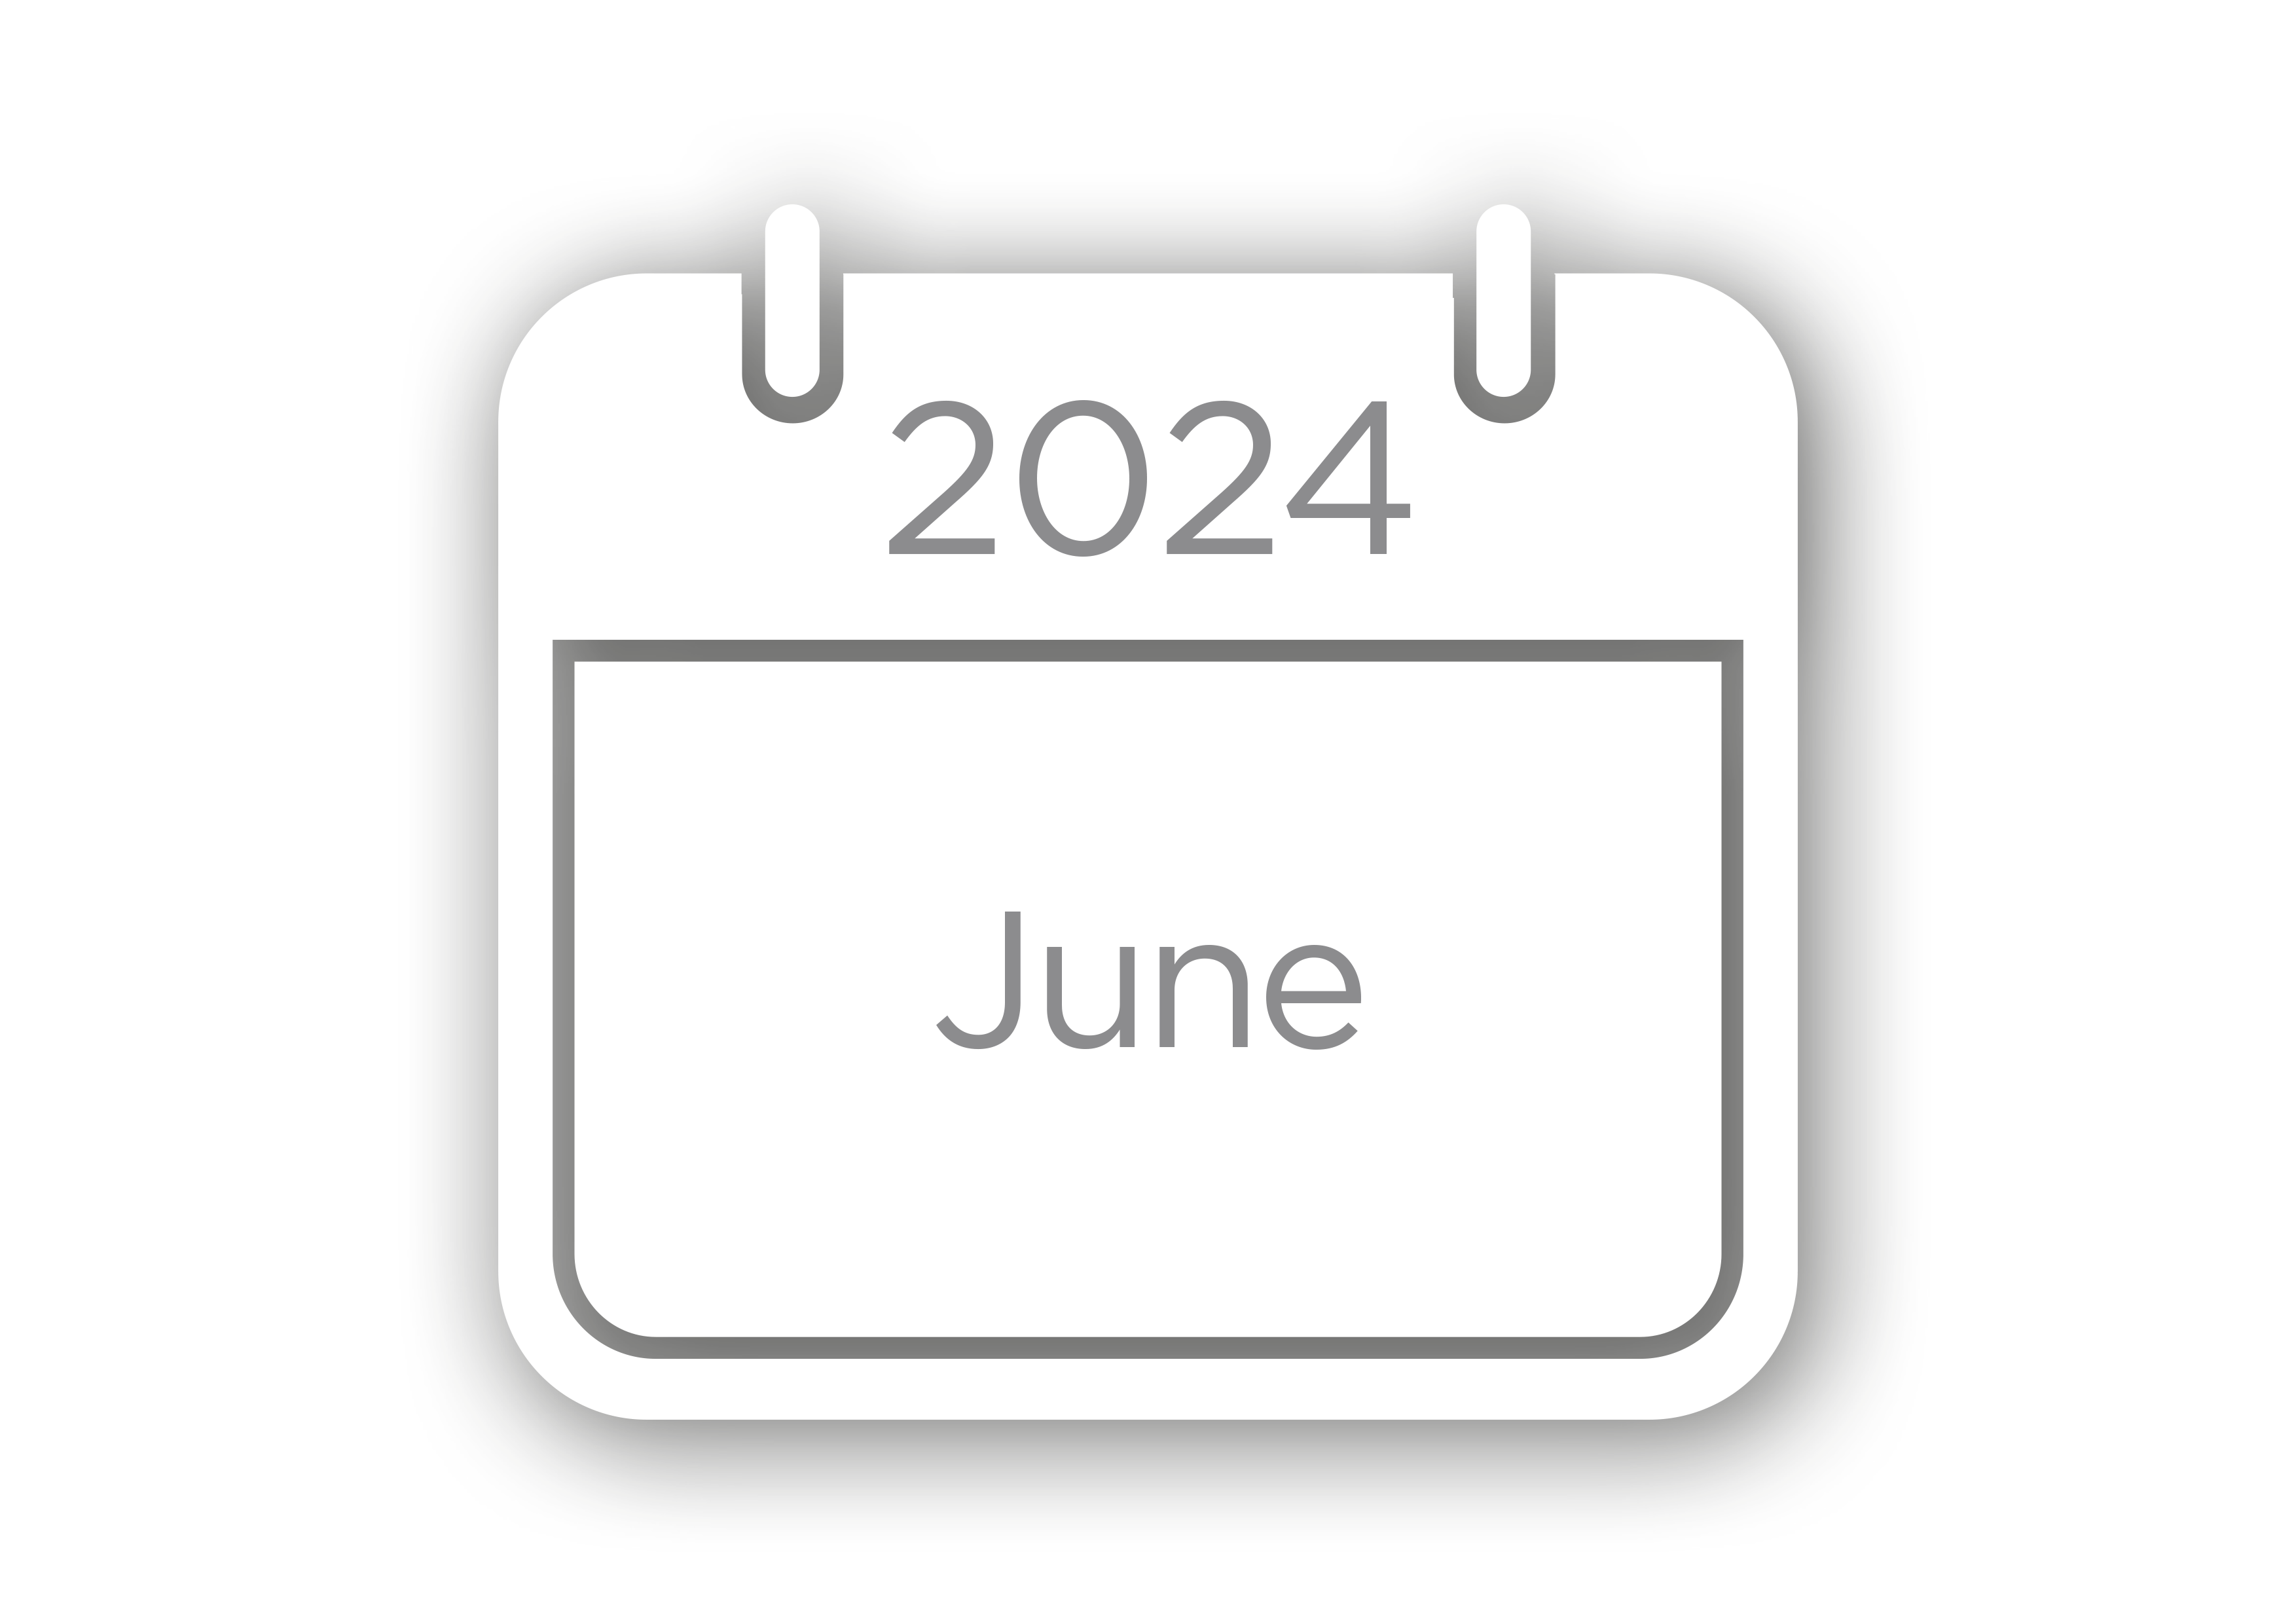 June 2024 Cruise Deals